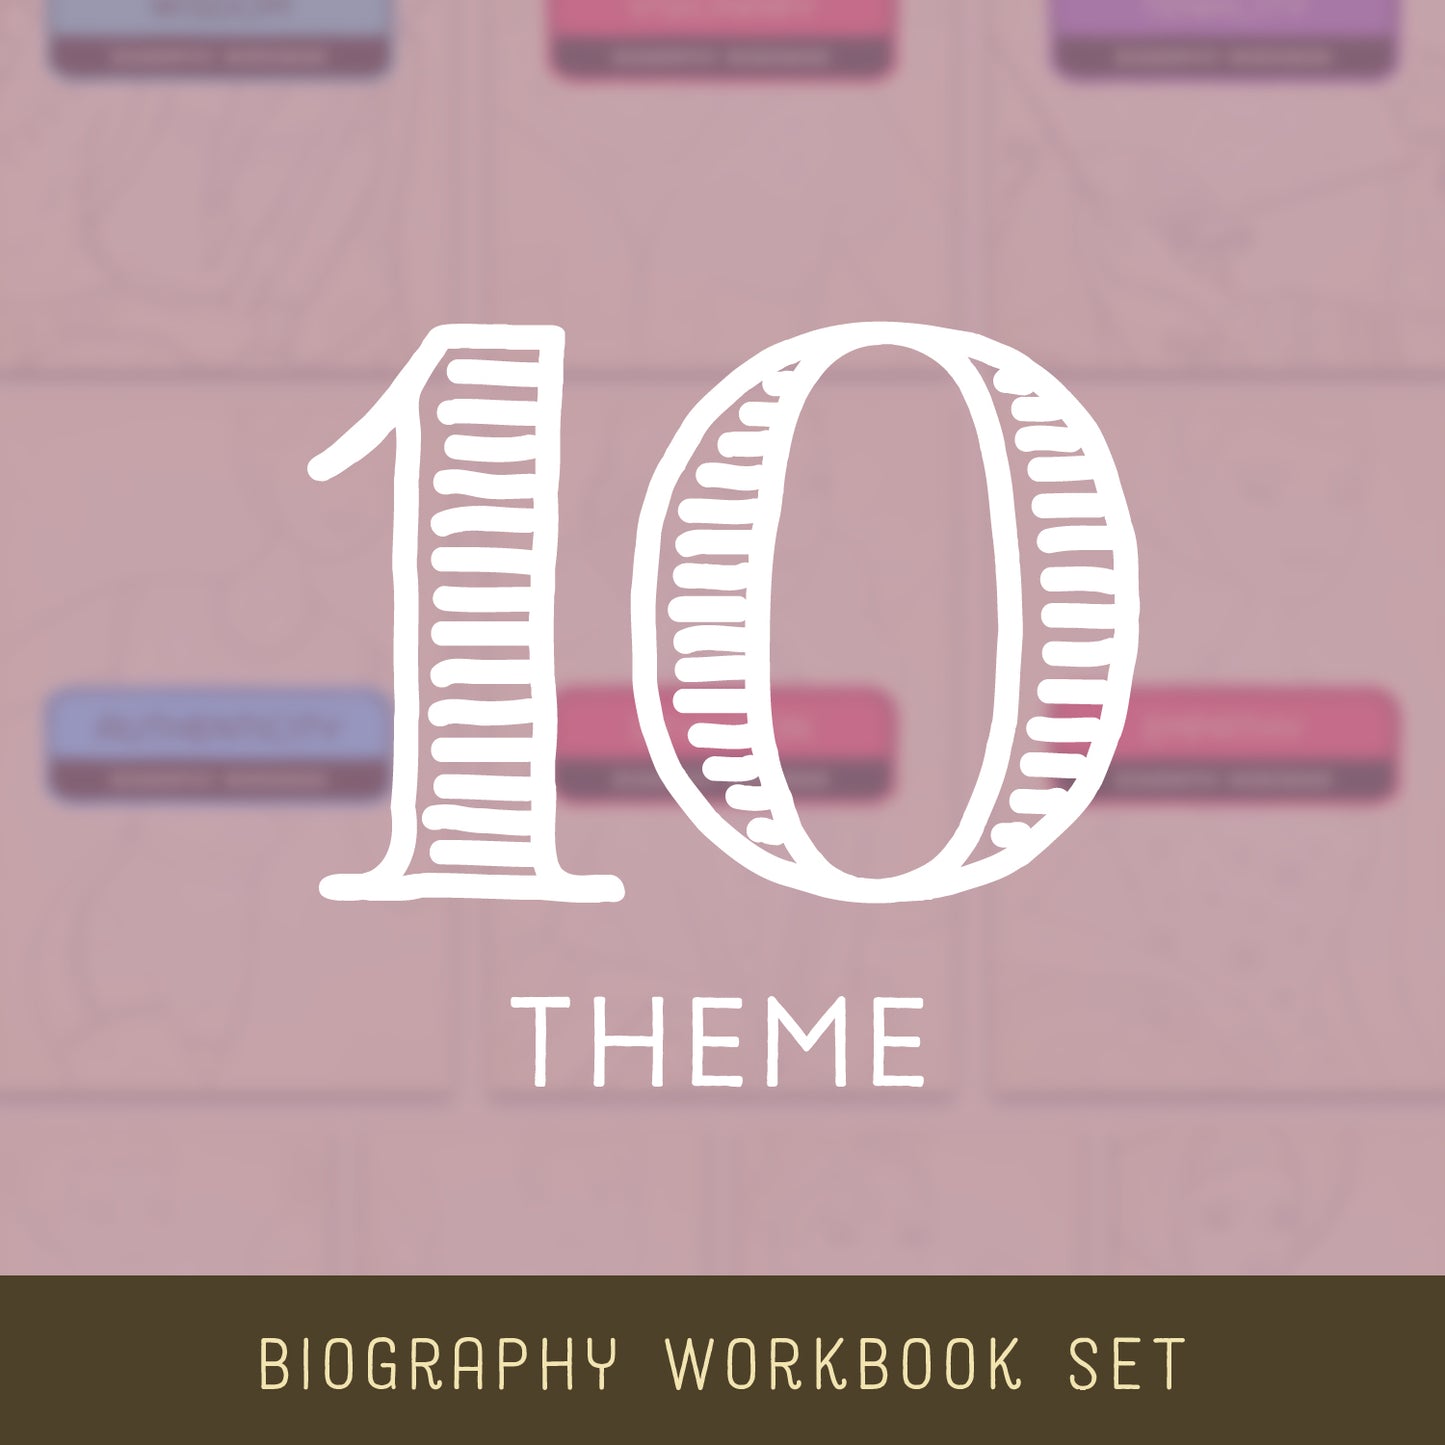 10-Theme | Biography Workbook Set